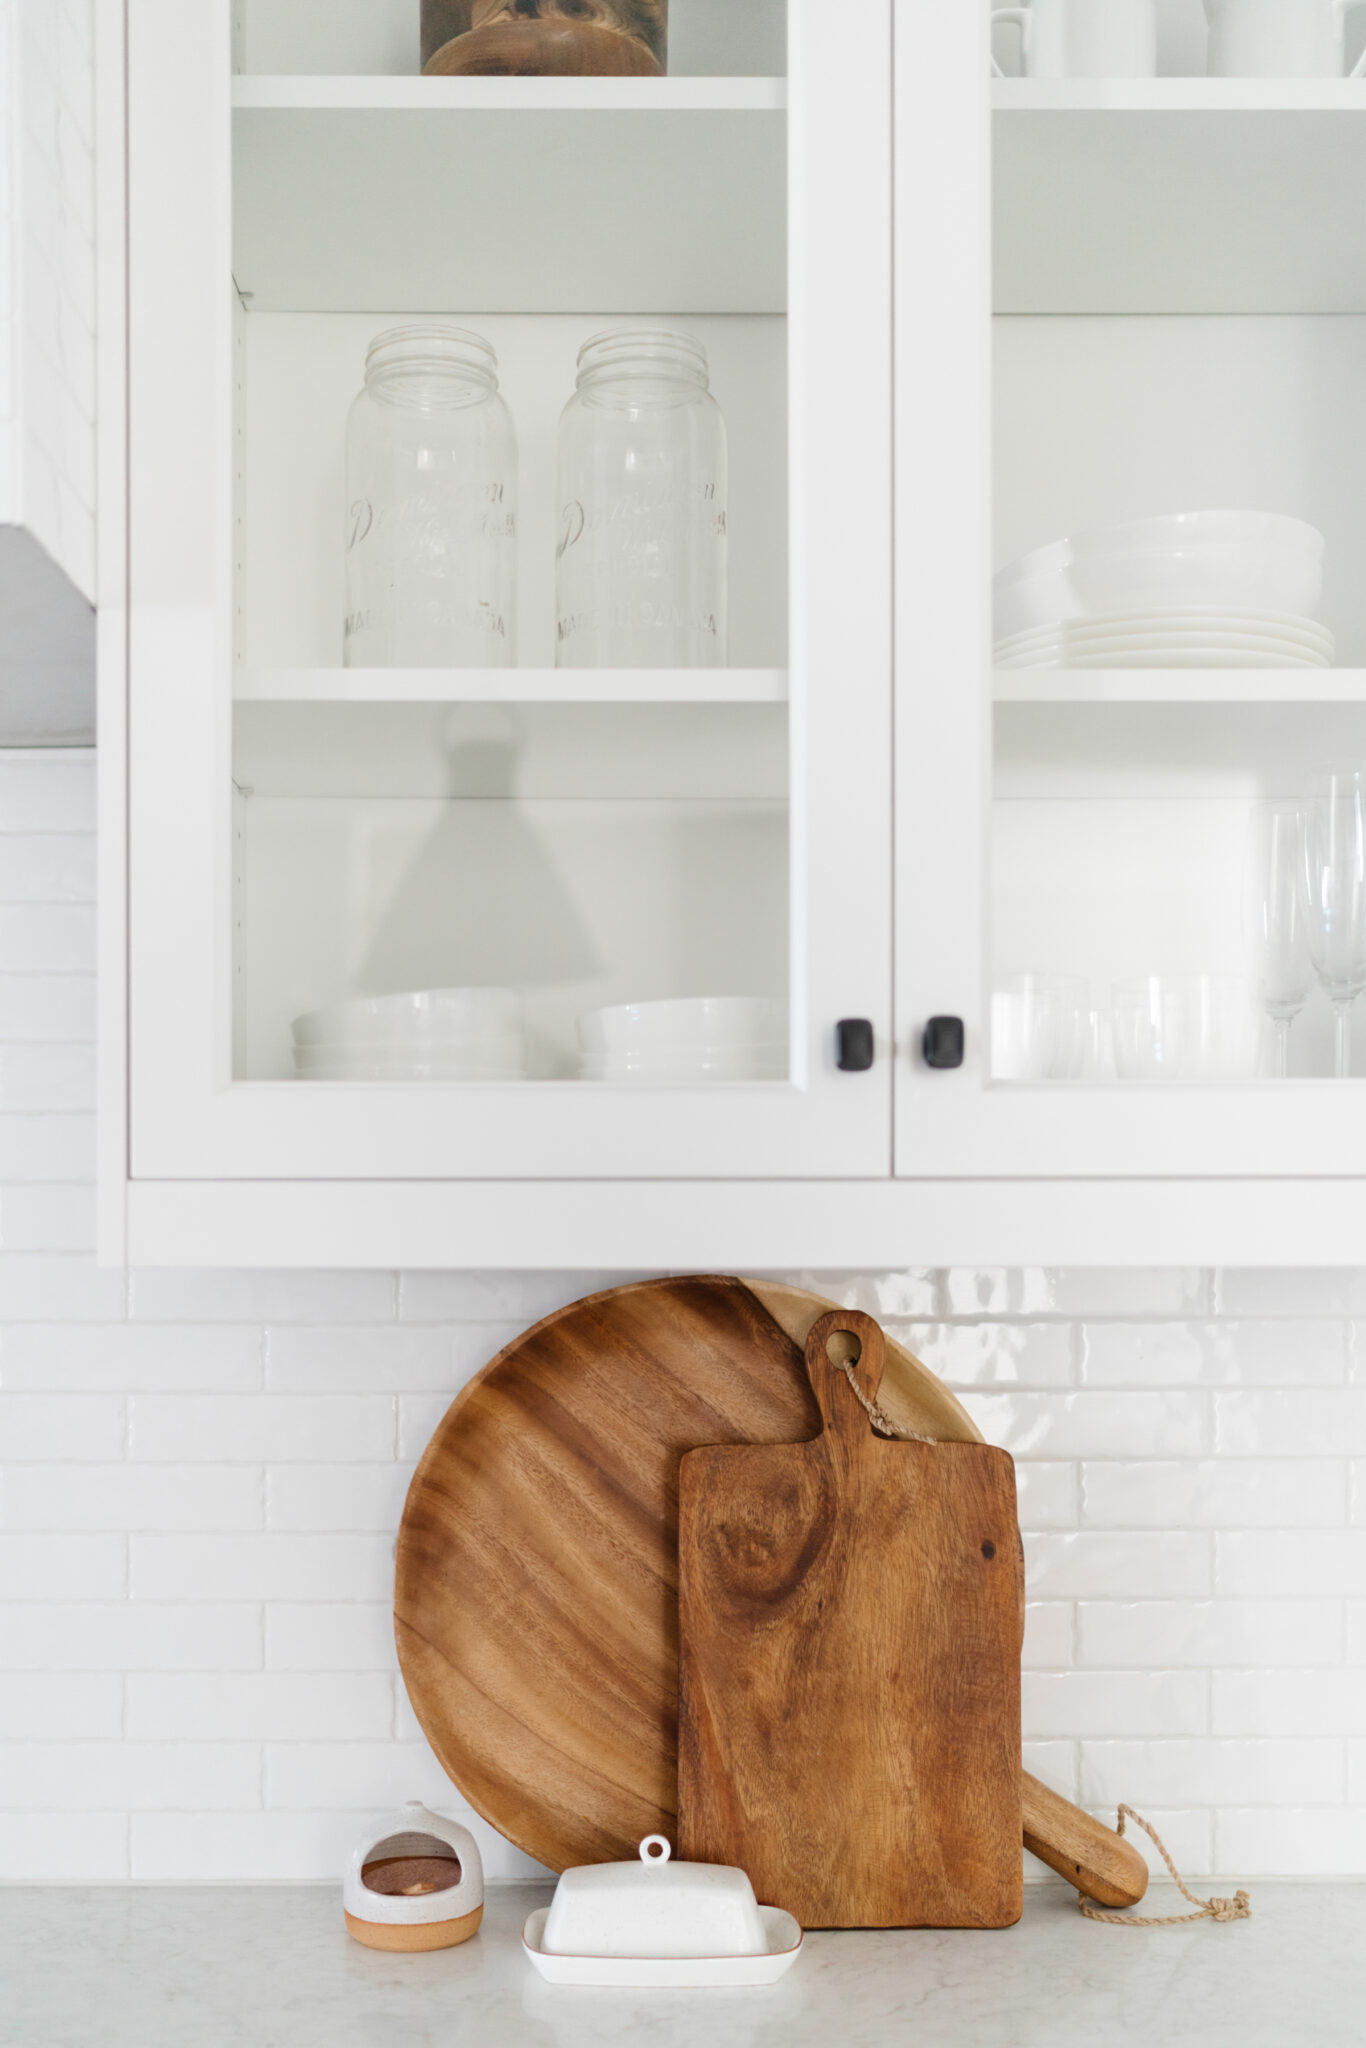 15 Kitchen Cabinet Space Saver Ideas • Kath Eats